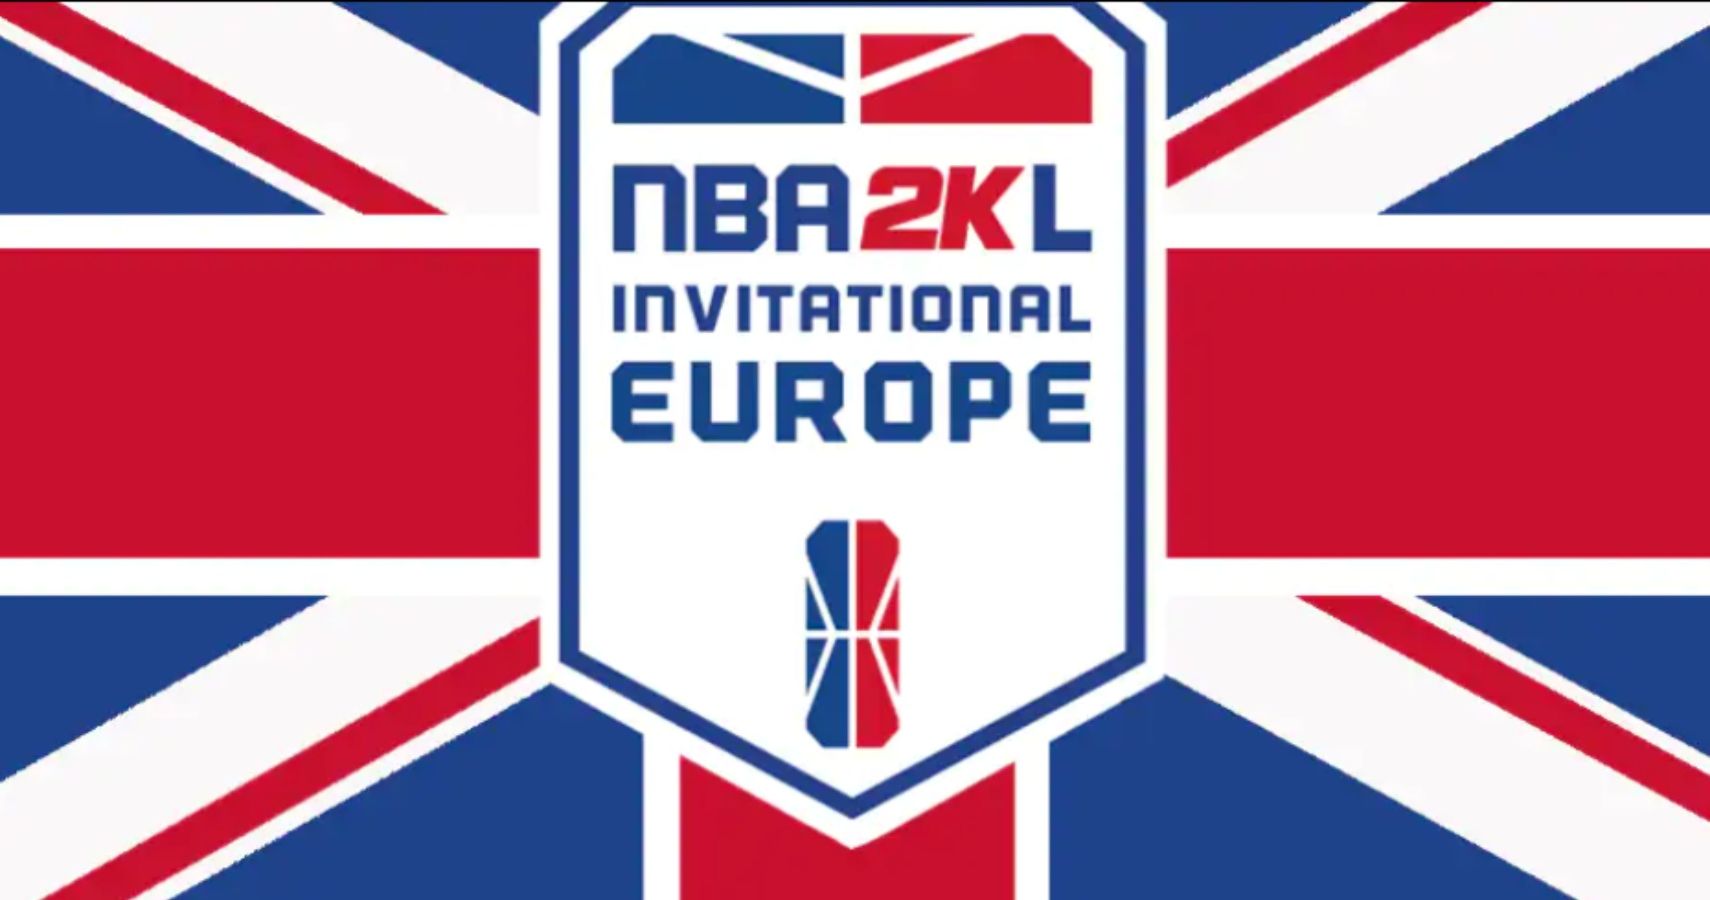 NBA 2k League Having Its First European Qualifier In December